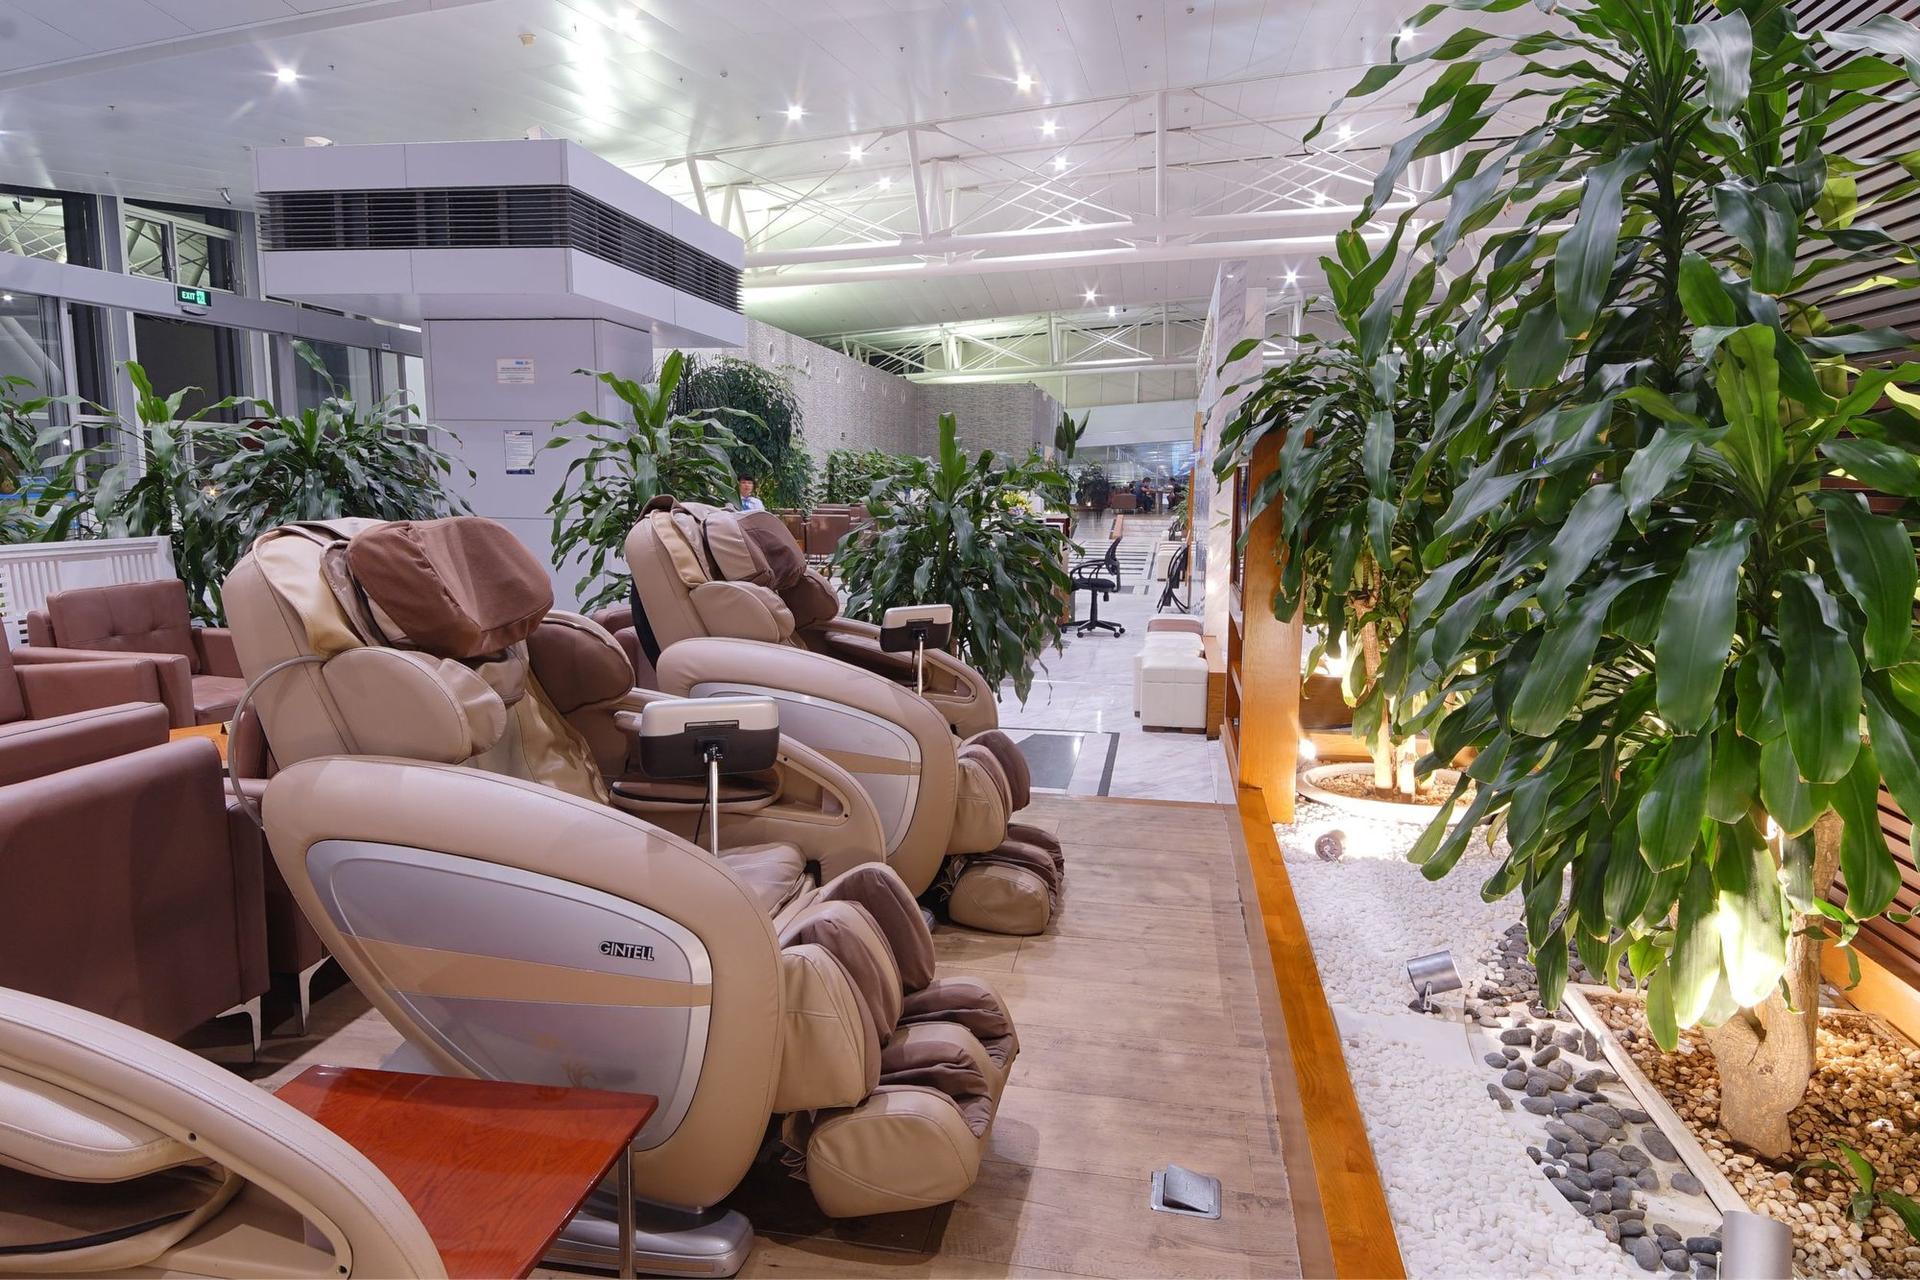 Noi Bai International Airport Business Lounge image 26 of 26